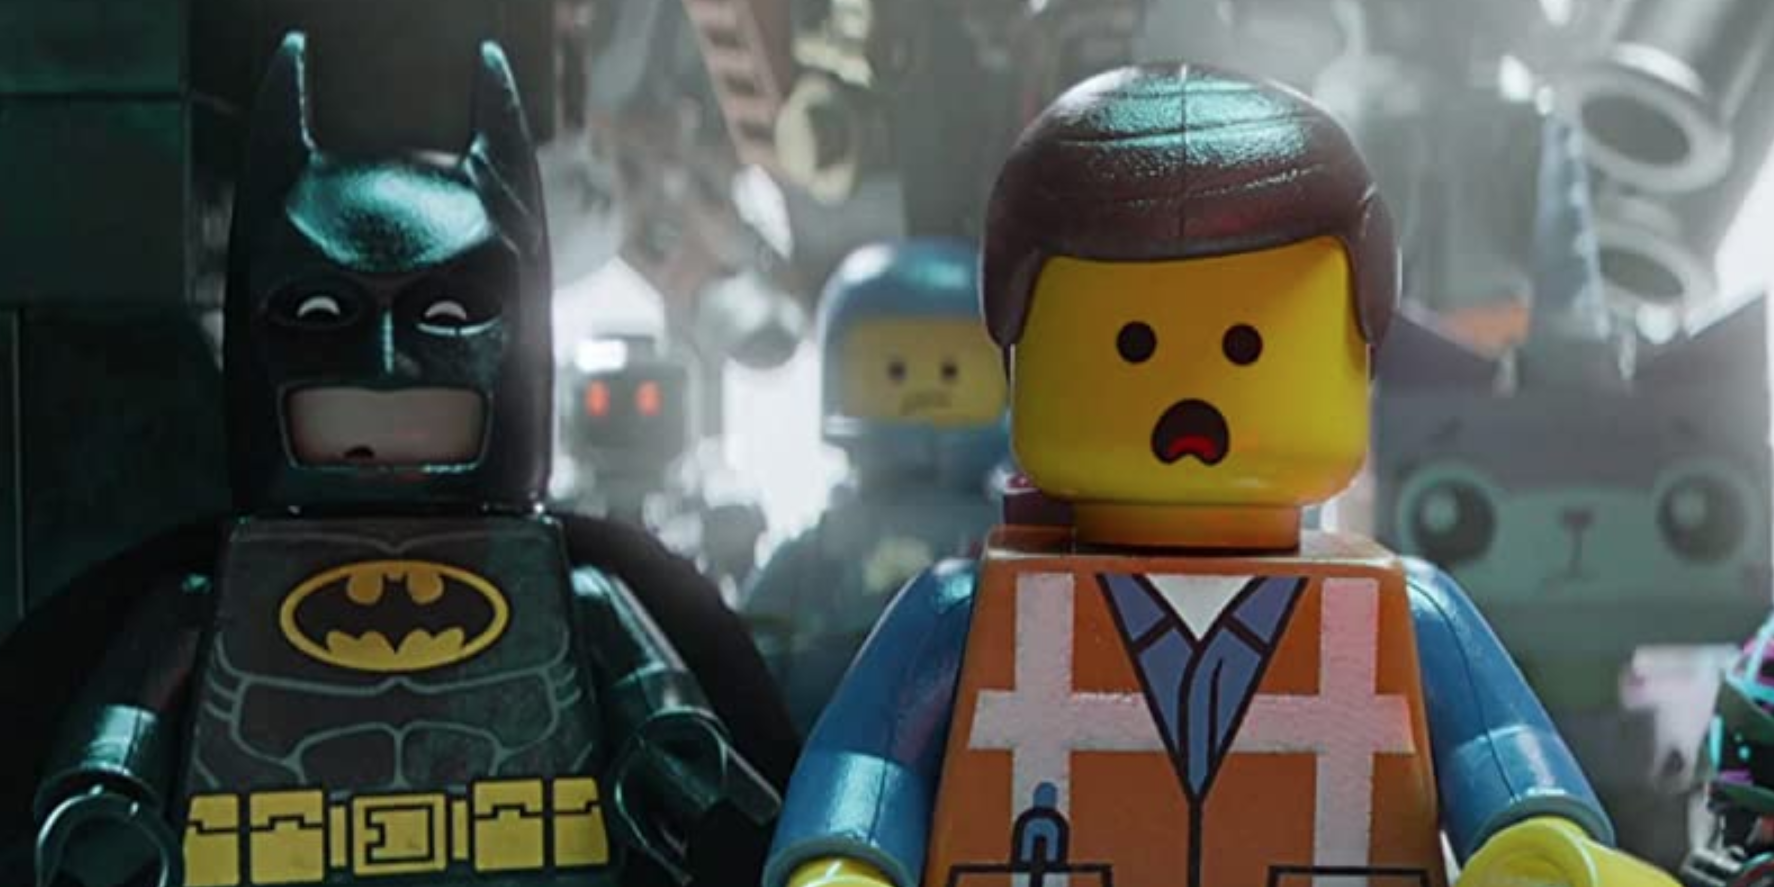 Will Arnett as Batman and Chris Pratt in The Lego Movie